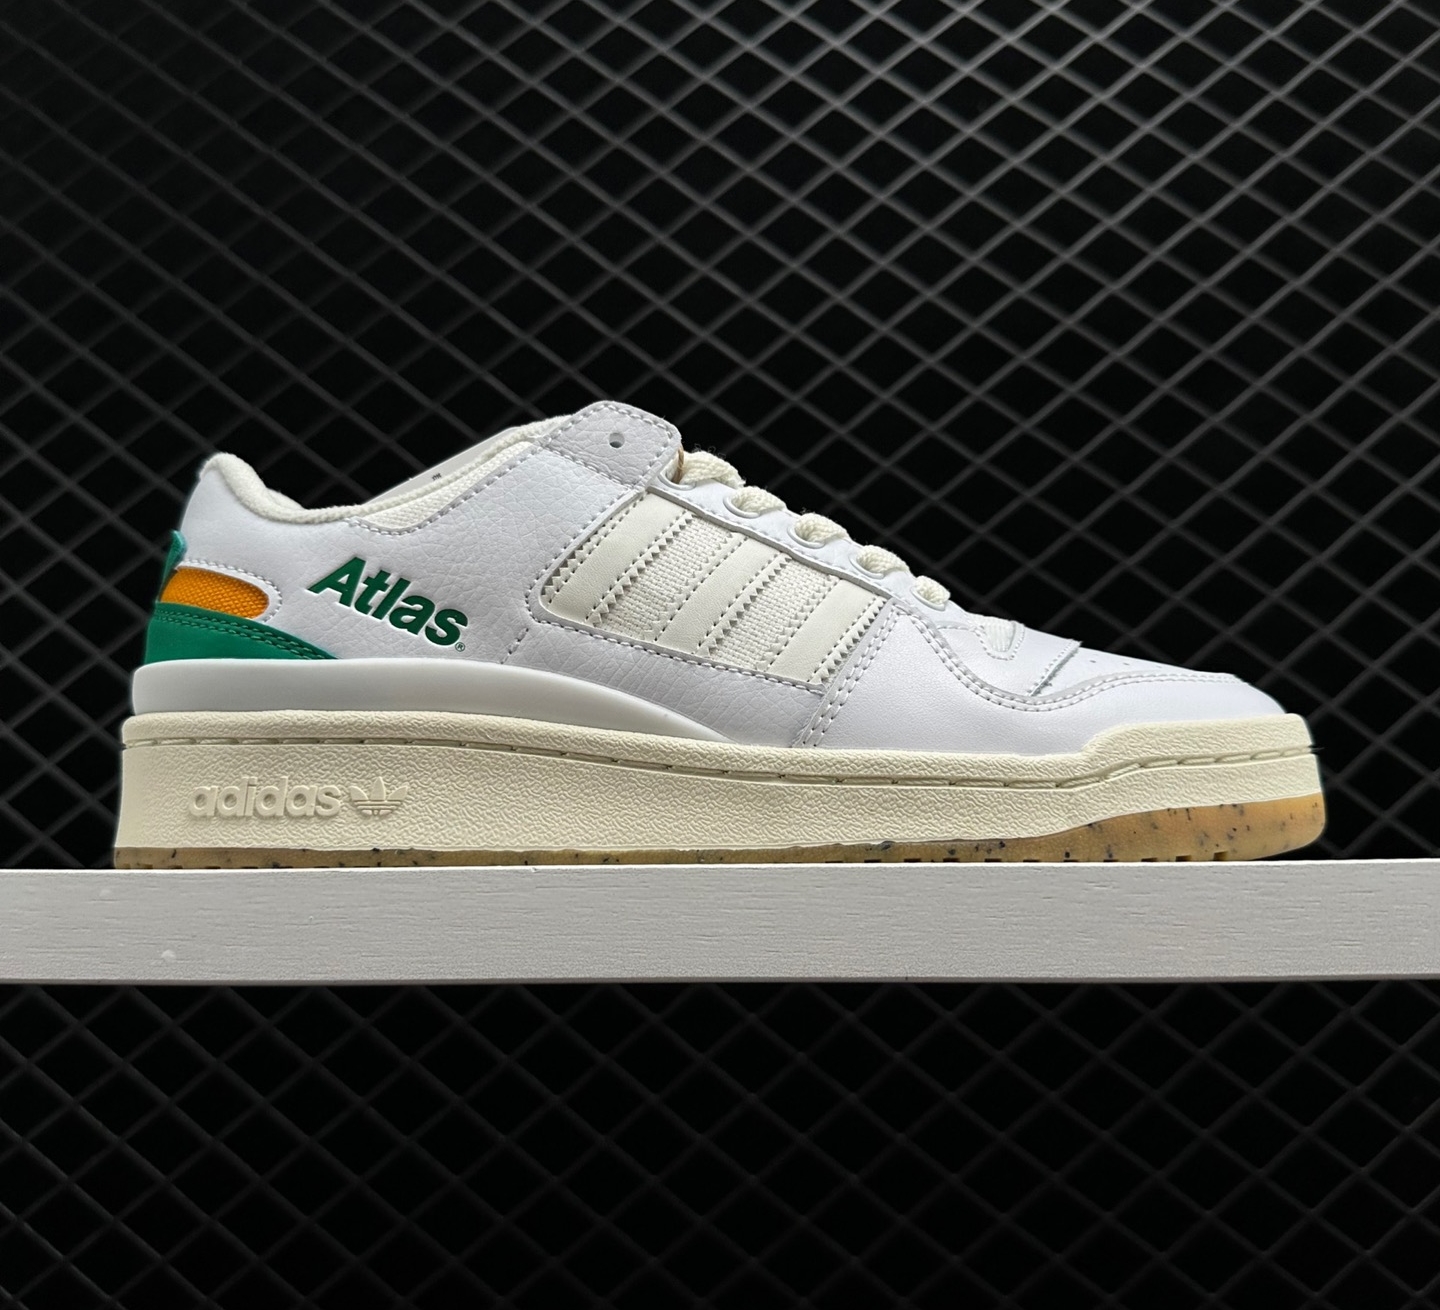 Adidas Originals X Atlas FORUM 84 ADV 'White' - Stylish and Sleek Sneakers